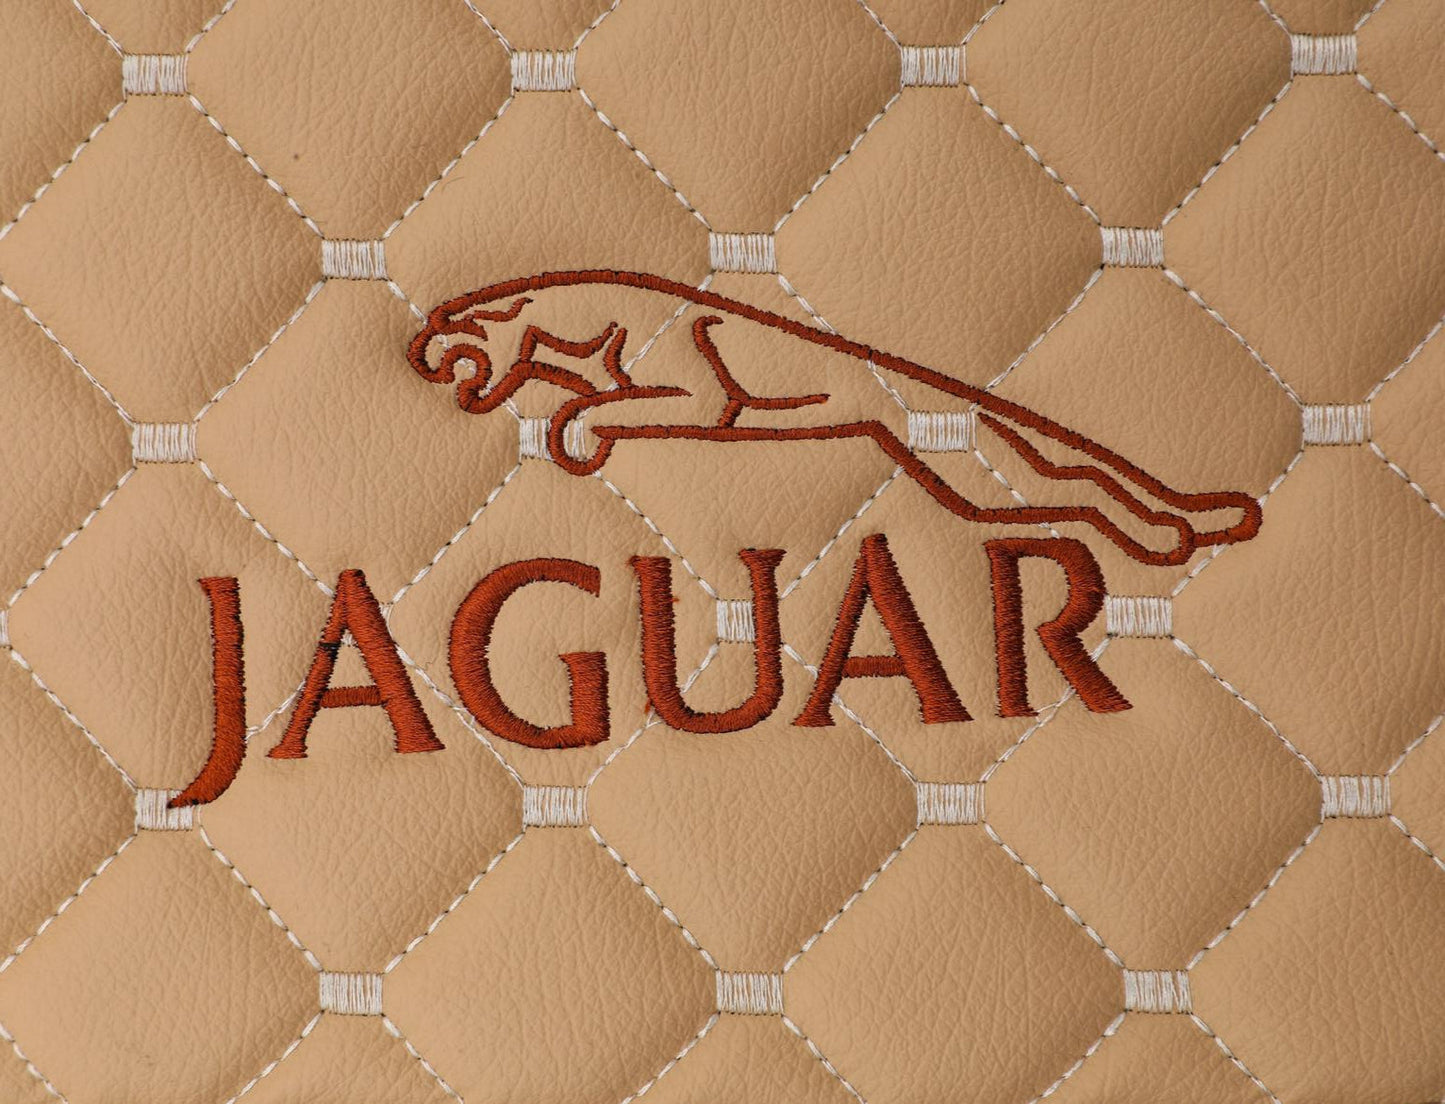 Jaguar XJ All Model Special Design Leather Custom Car Mat